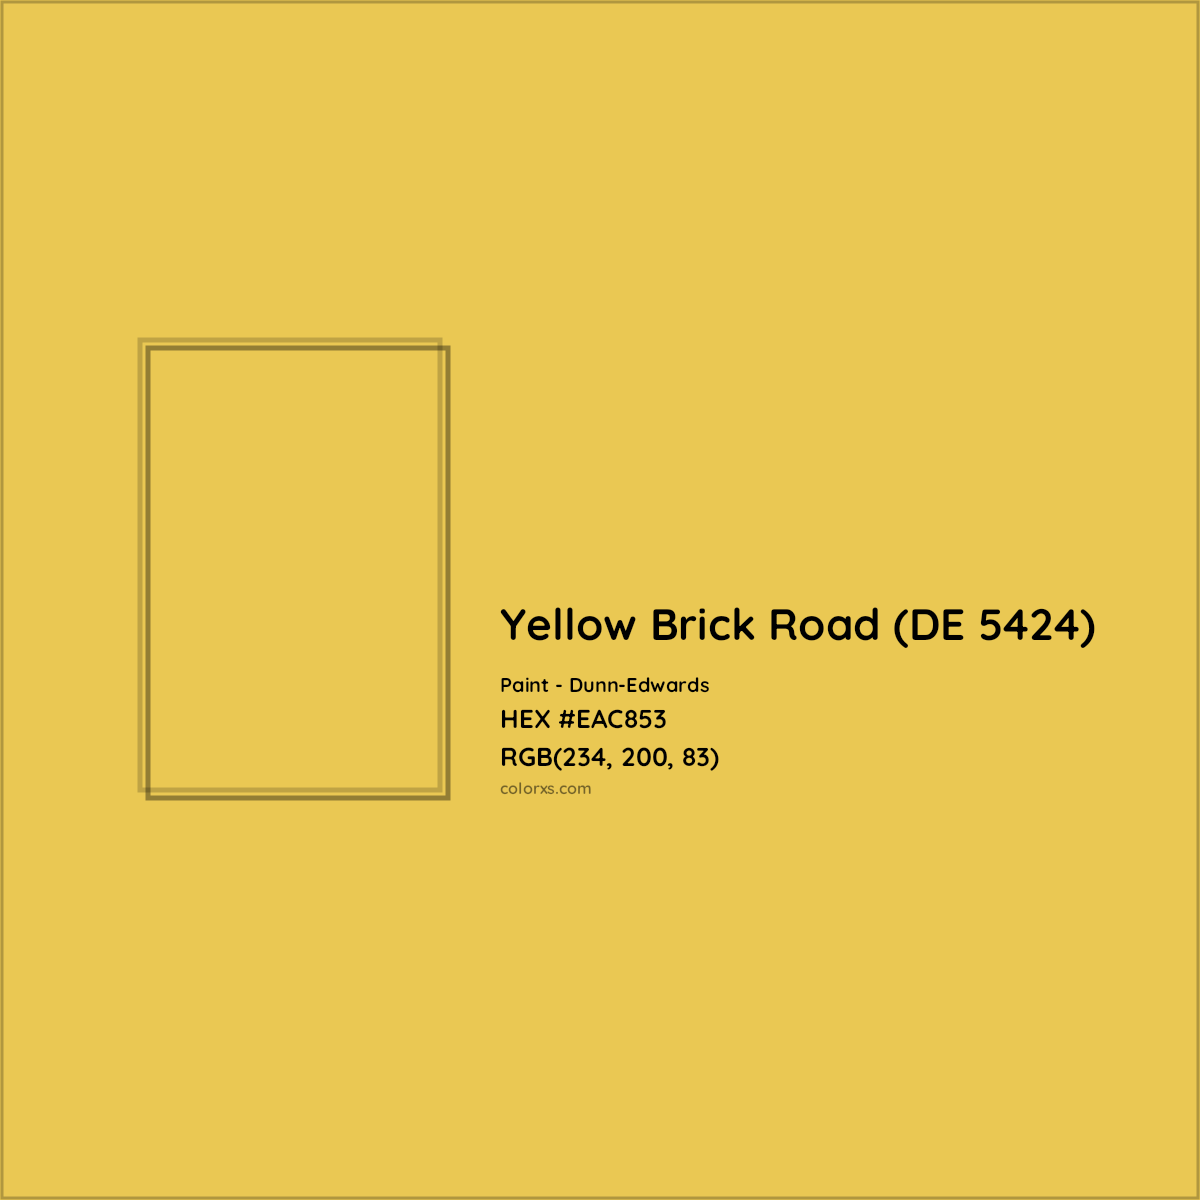 HEX #EAC853 Yellow Brick Road (DE 5424) Paint Dunn-Edwards - Color Code